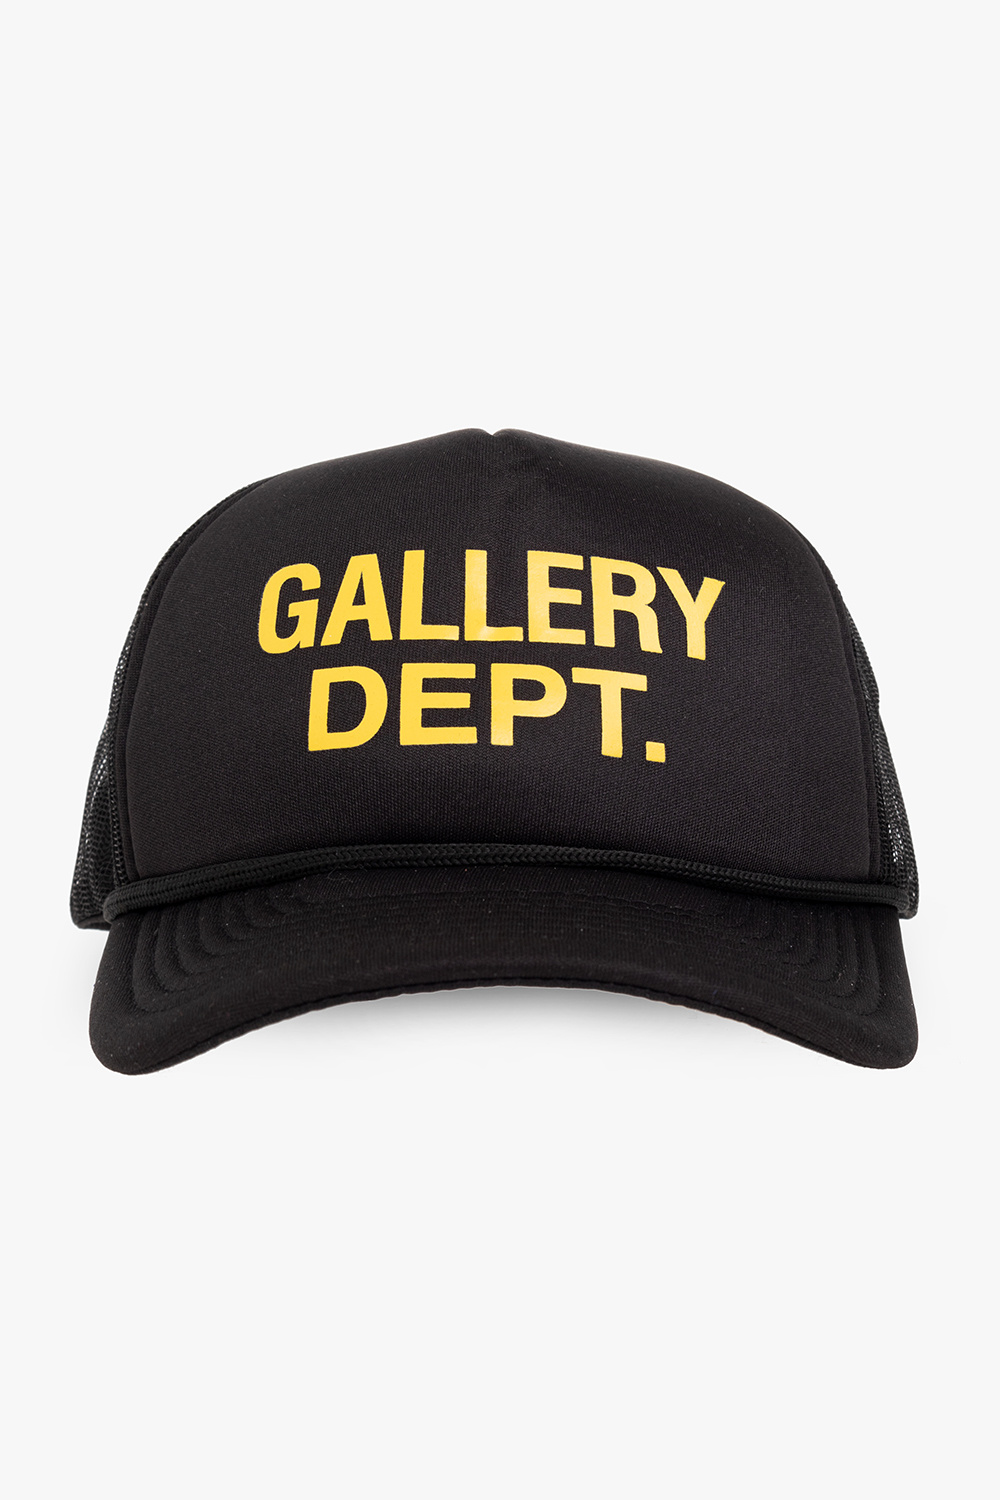 GALLERY DEPT. Baseball cap